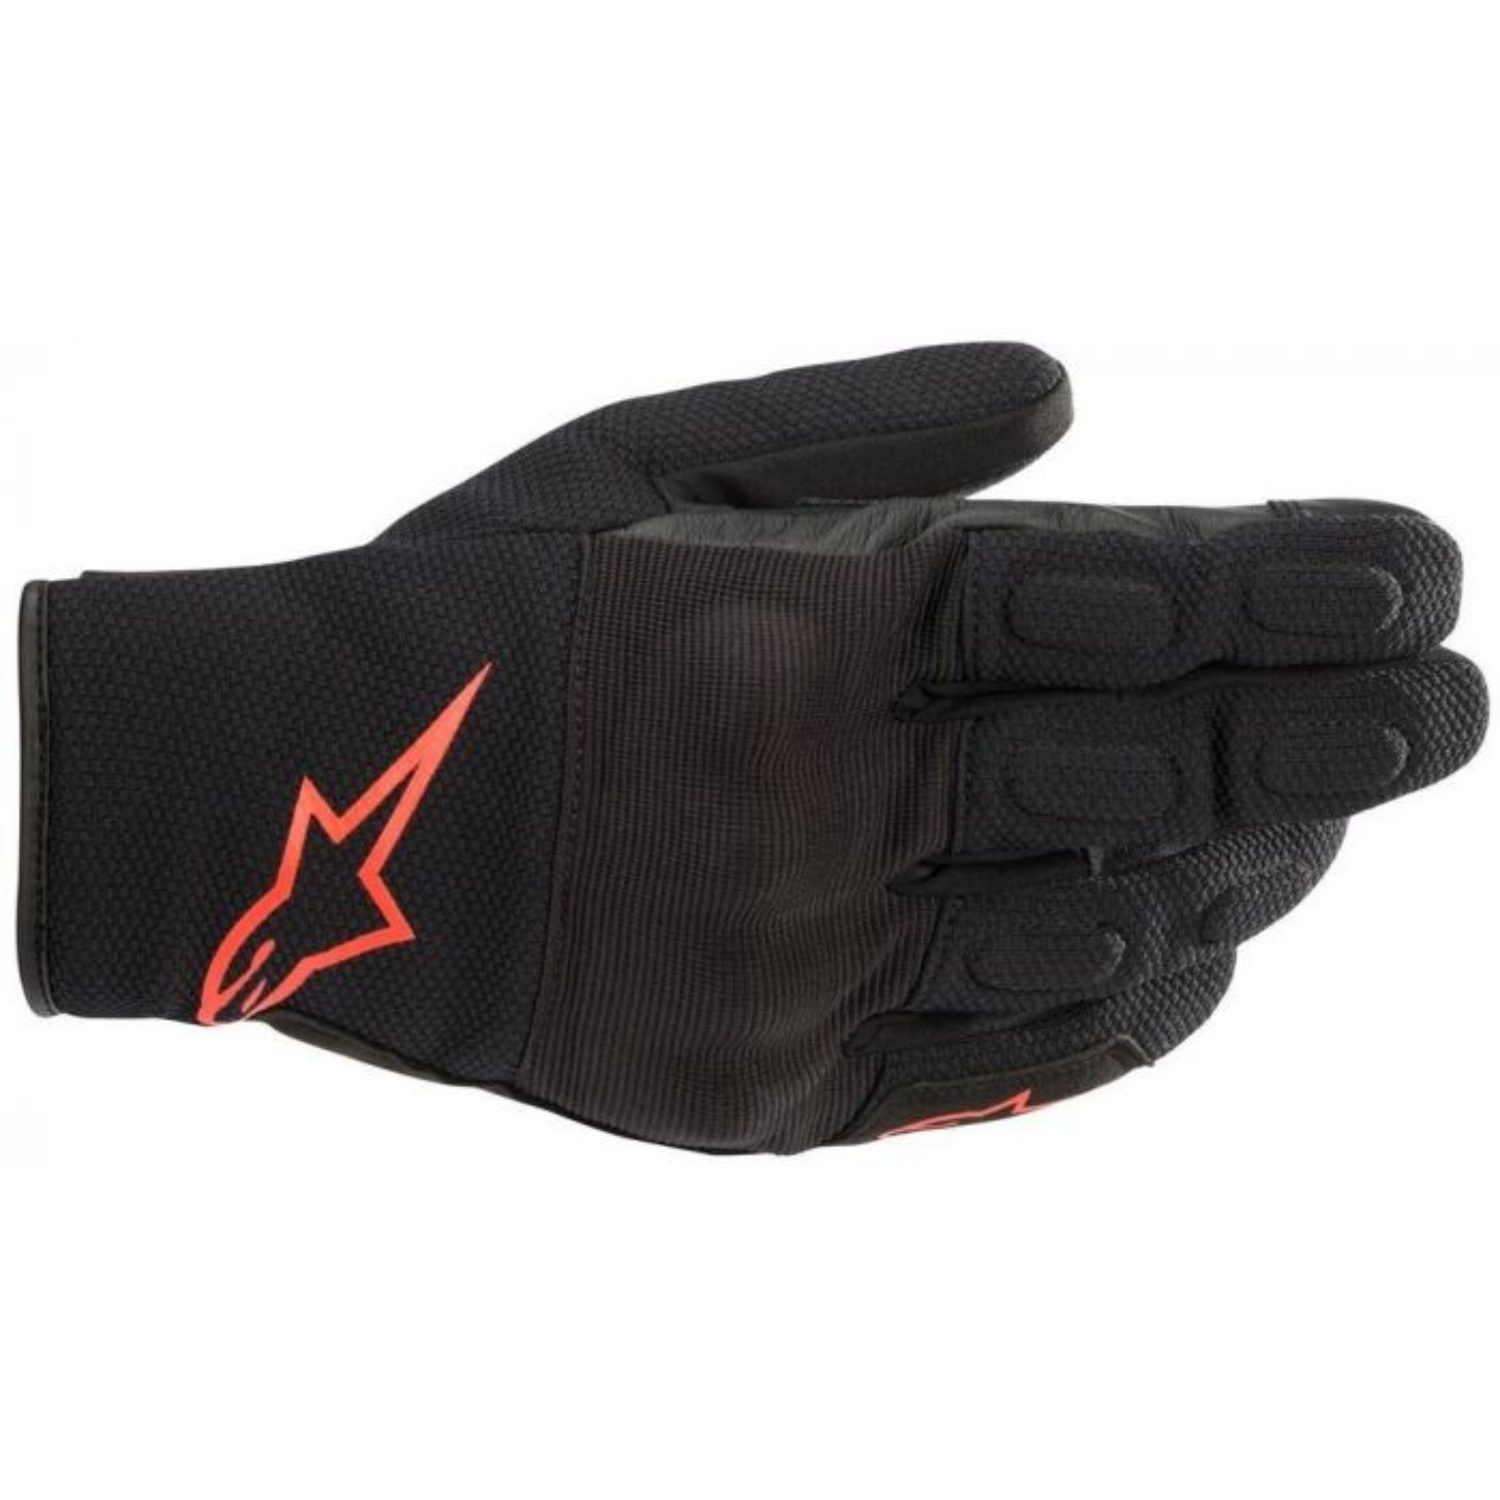 Image of Alpinestars S Max Drystar Gloves Black Red Fluo Größe S